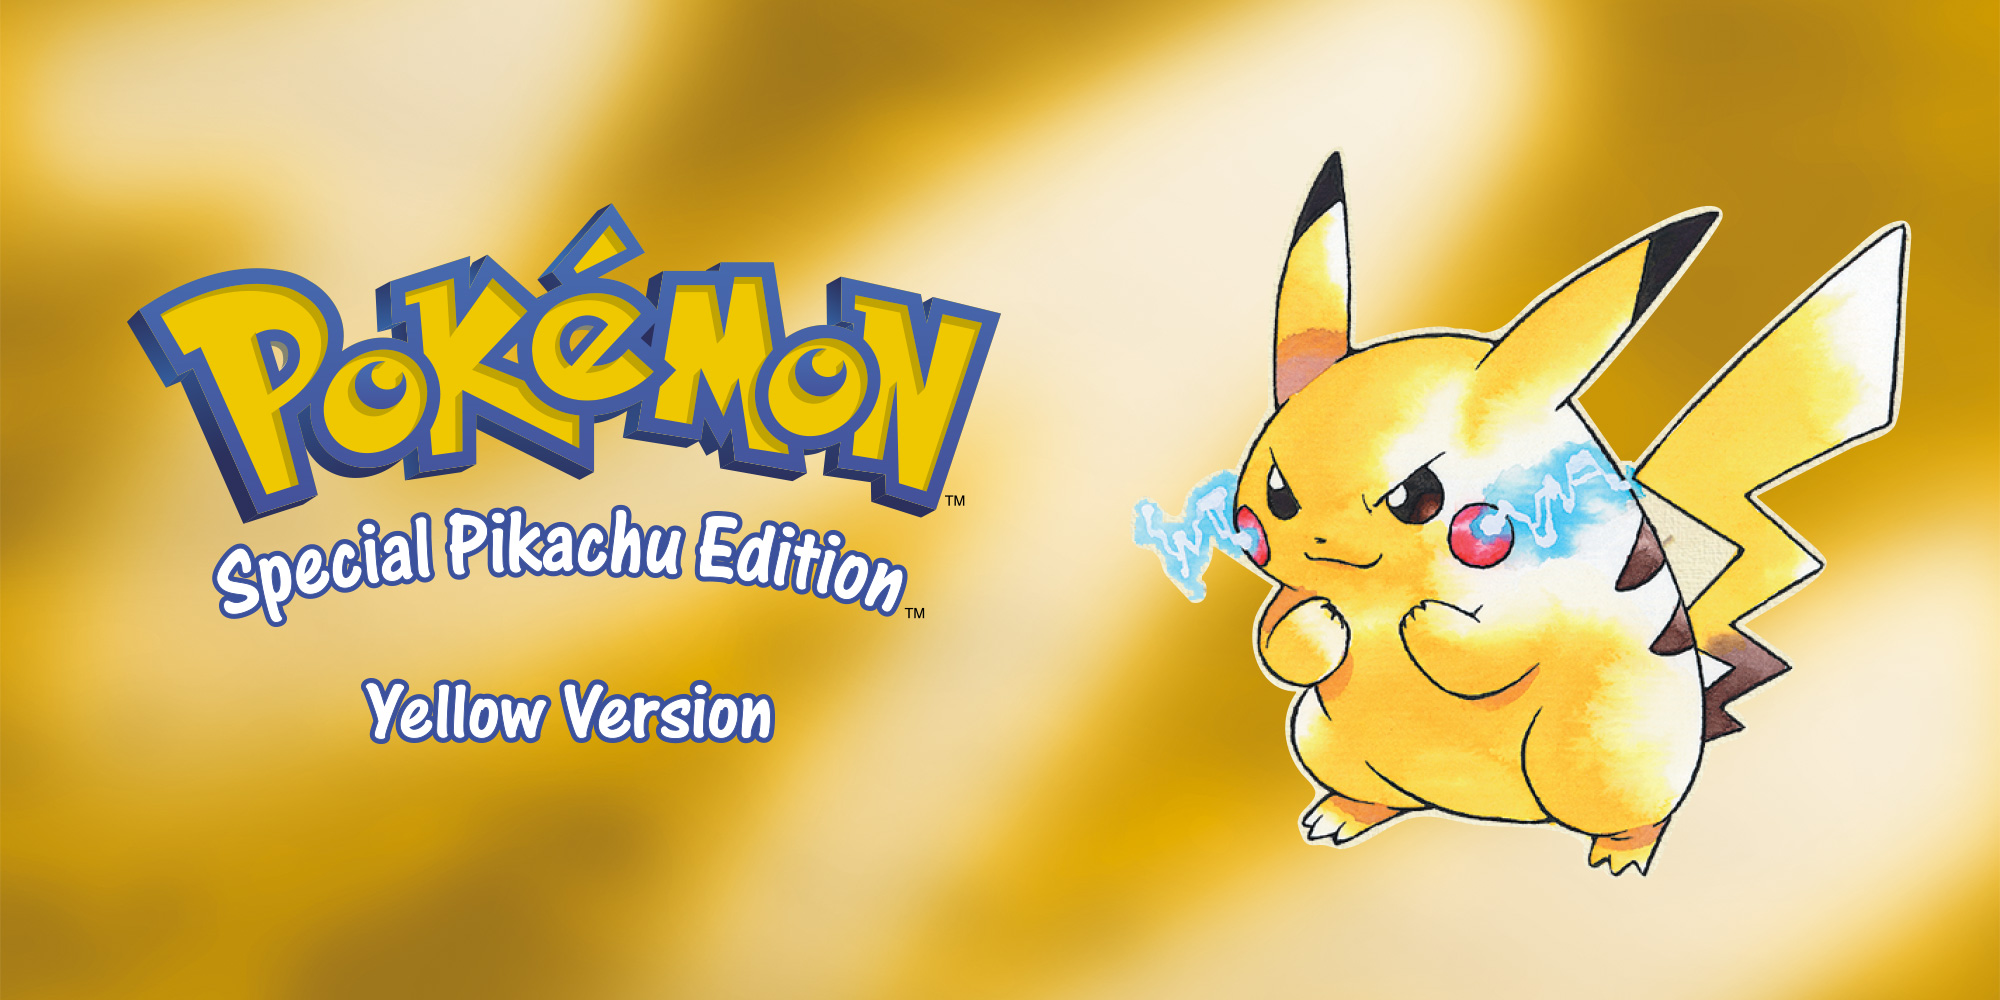 pokemon yellow 3ds free download code